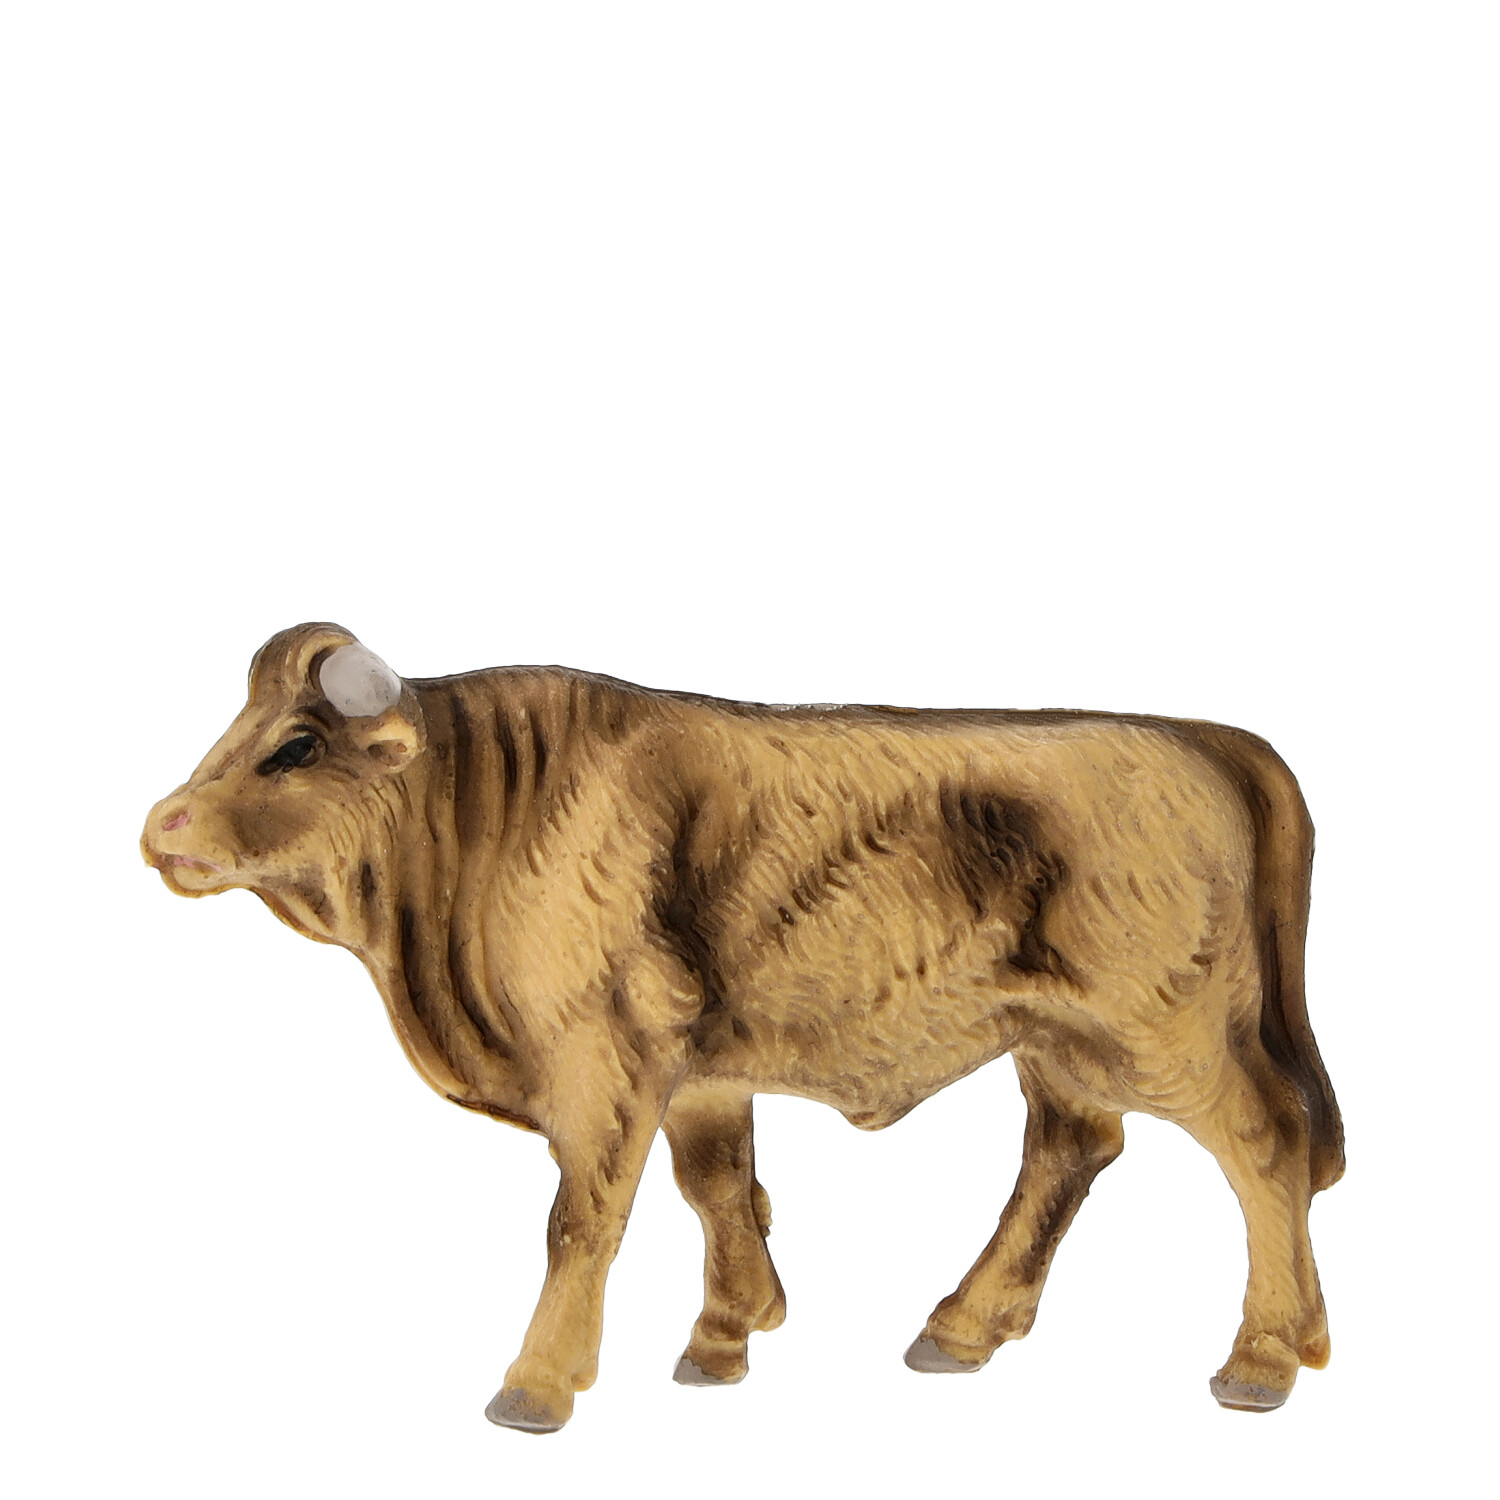 Standing ox - Marolin Plastik - Resin Nativity figure - made in Germany